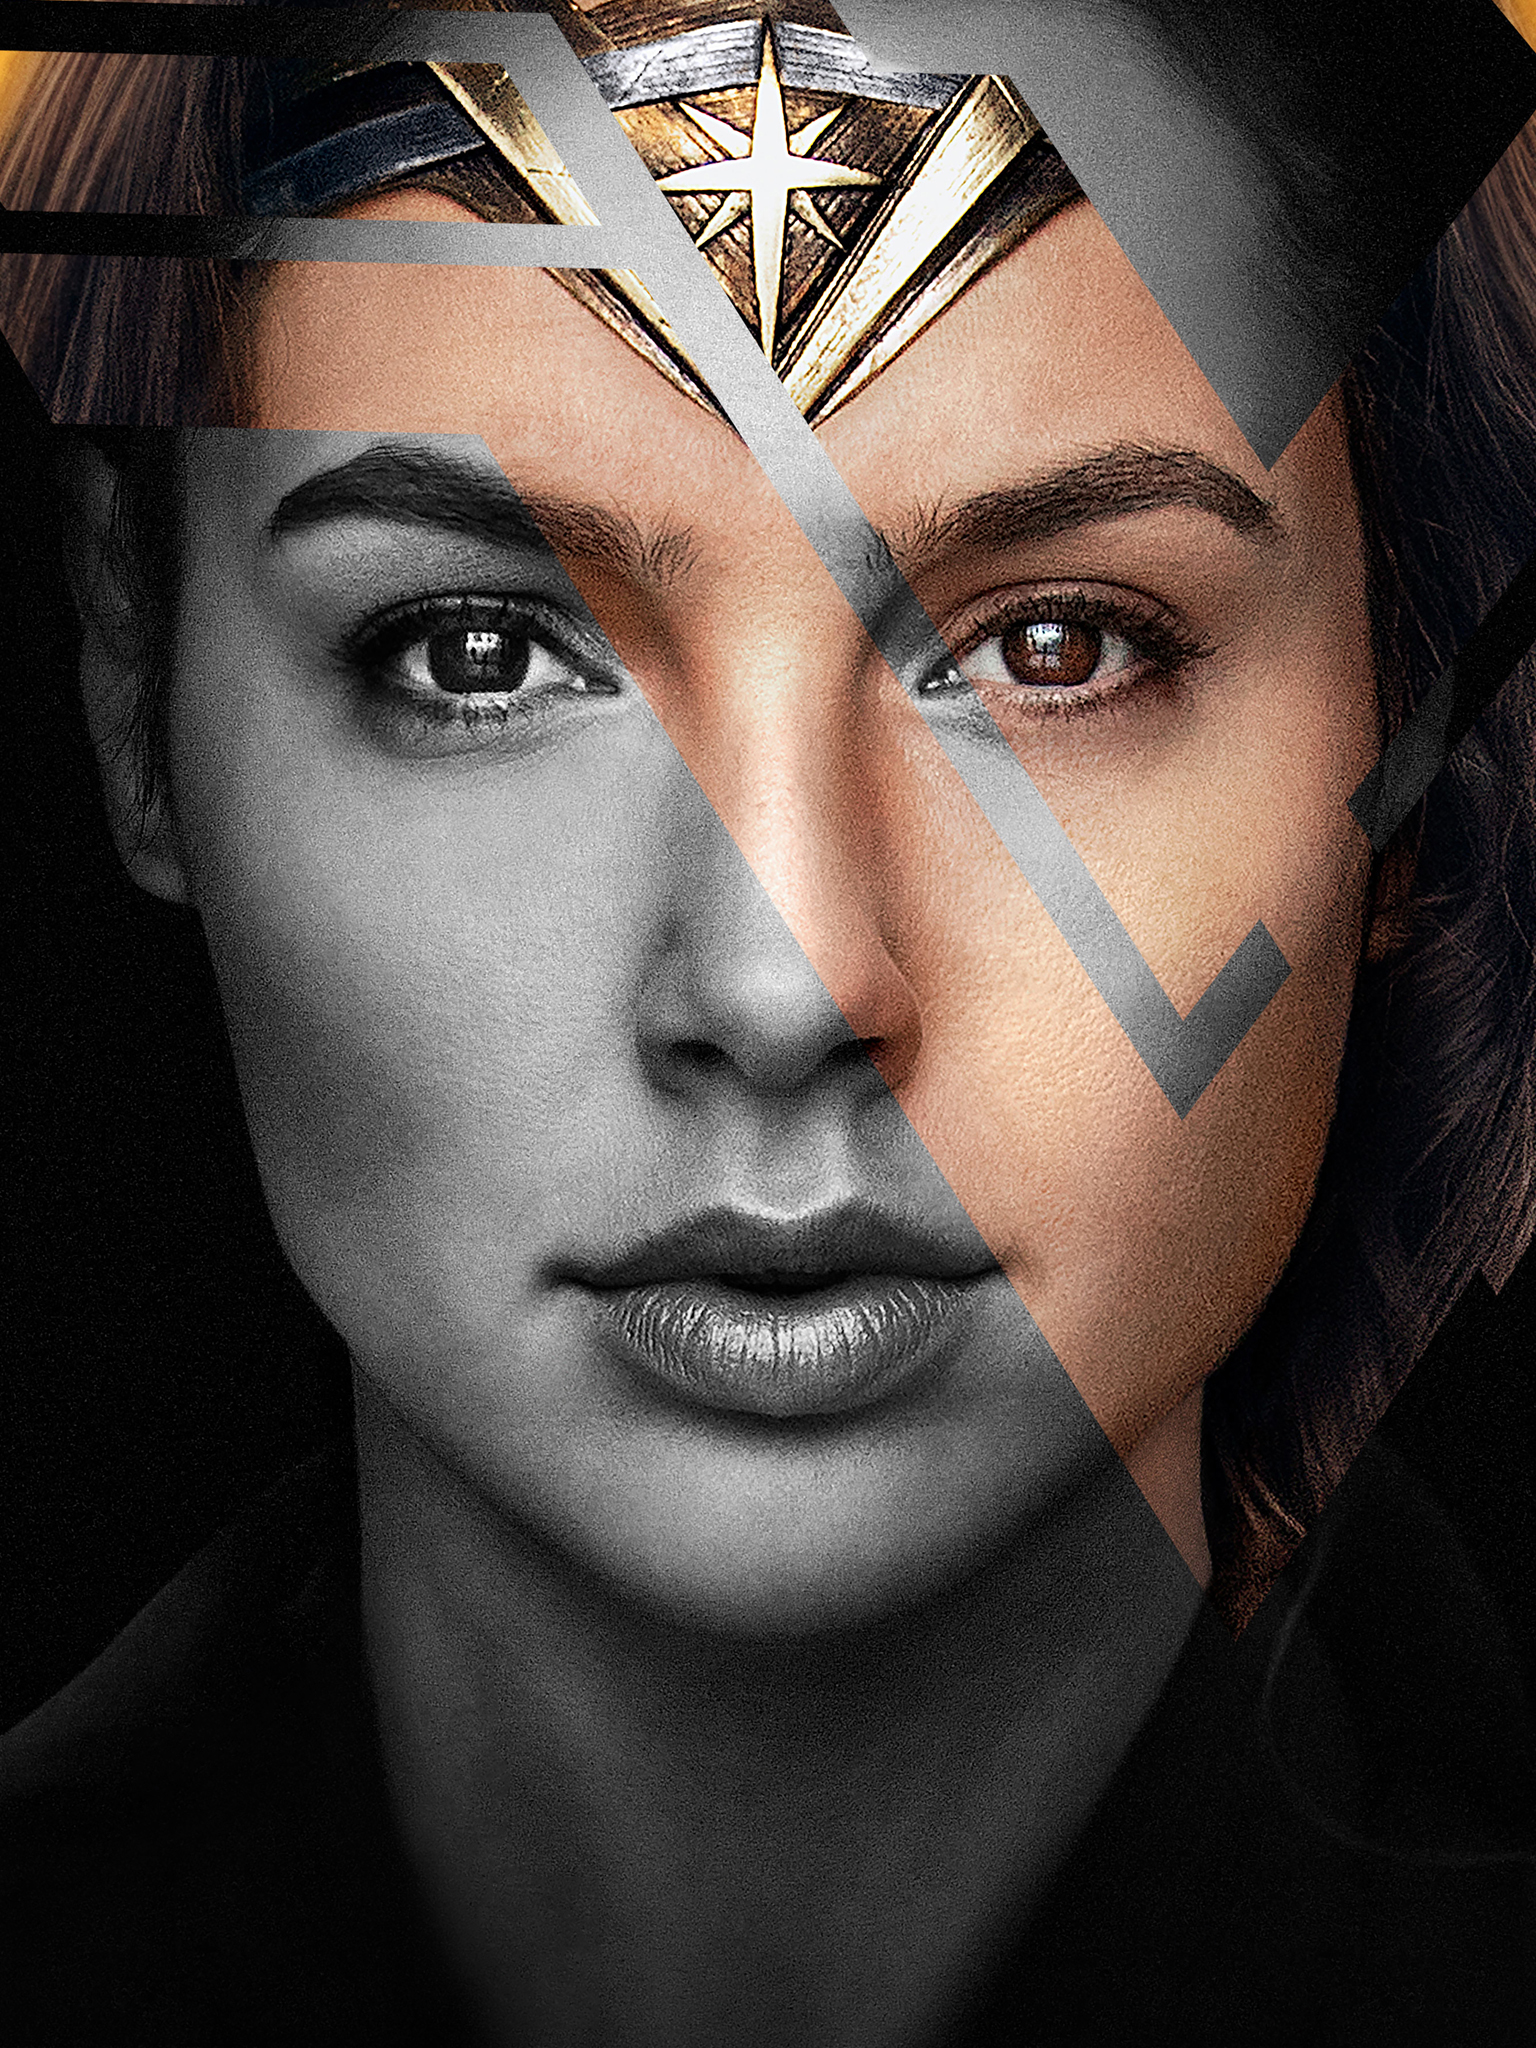 People 1536x2048 Wonder Woman Gal Gadot women DC Extended Universe movies face superheroines portrait closeup actress Israeli